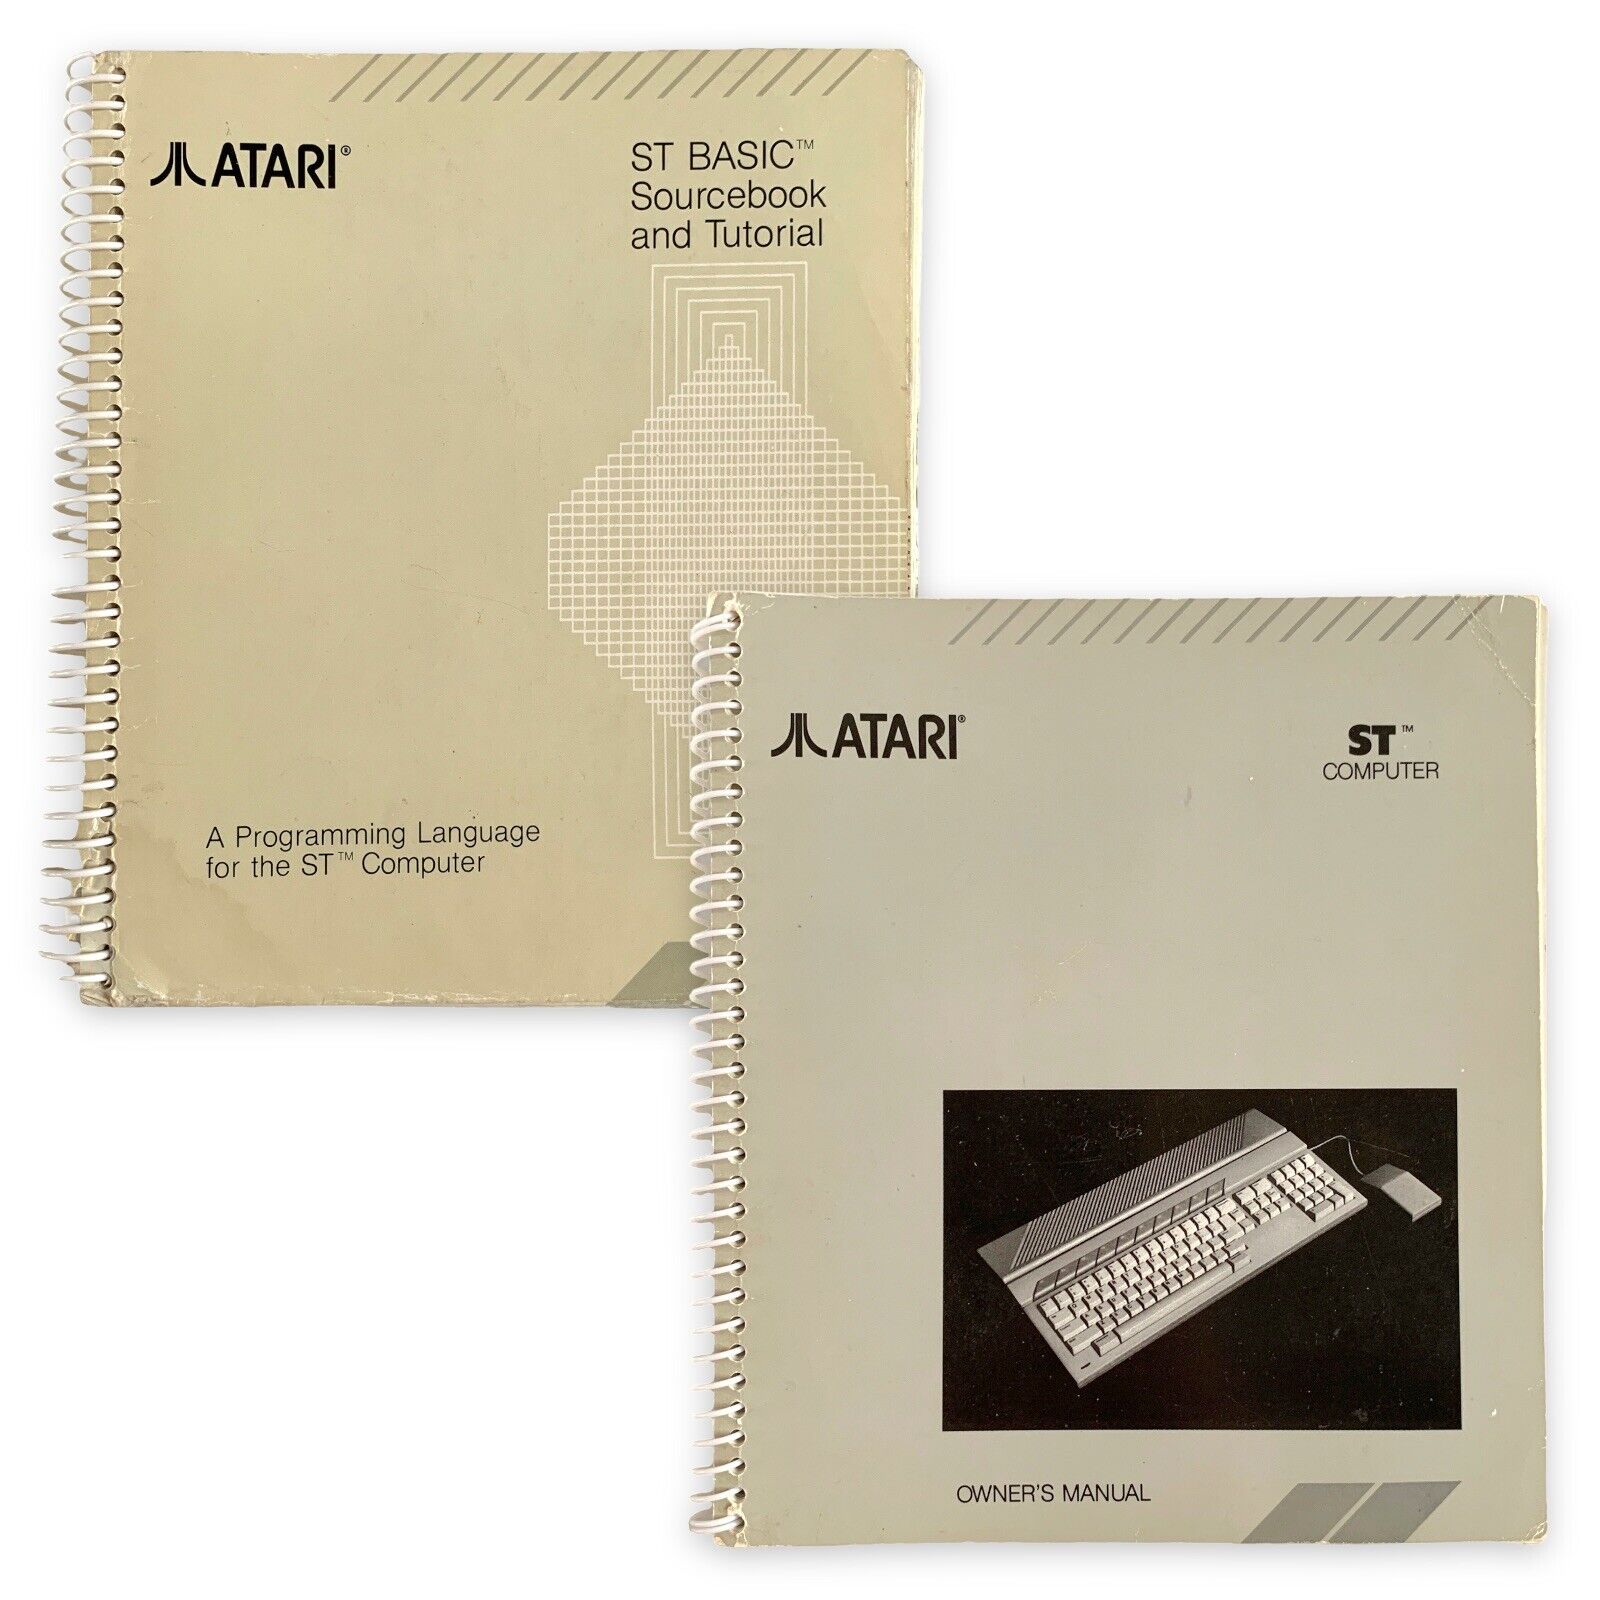 Atari ST Computer Owners Manual and ST BASIC Sourcebook VTG 1986